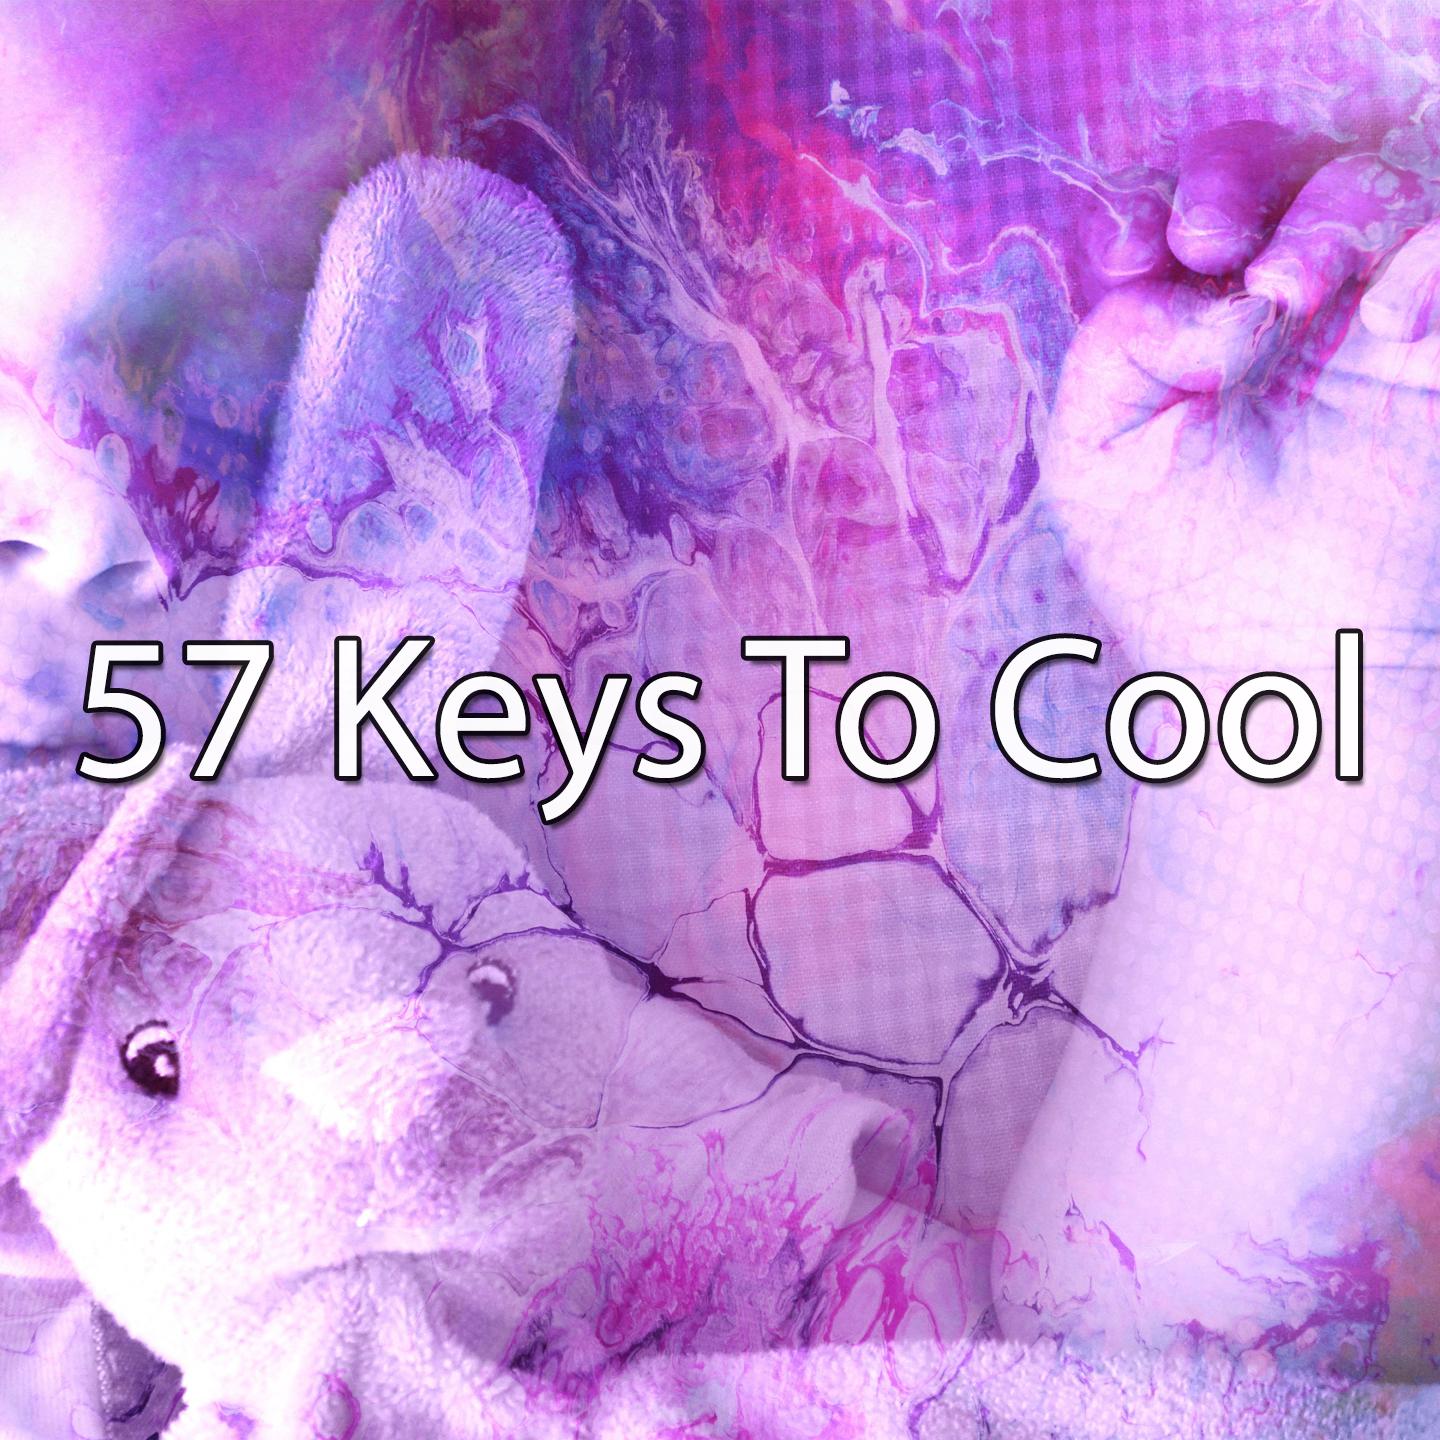 57 Keys to Cool